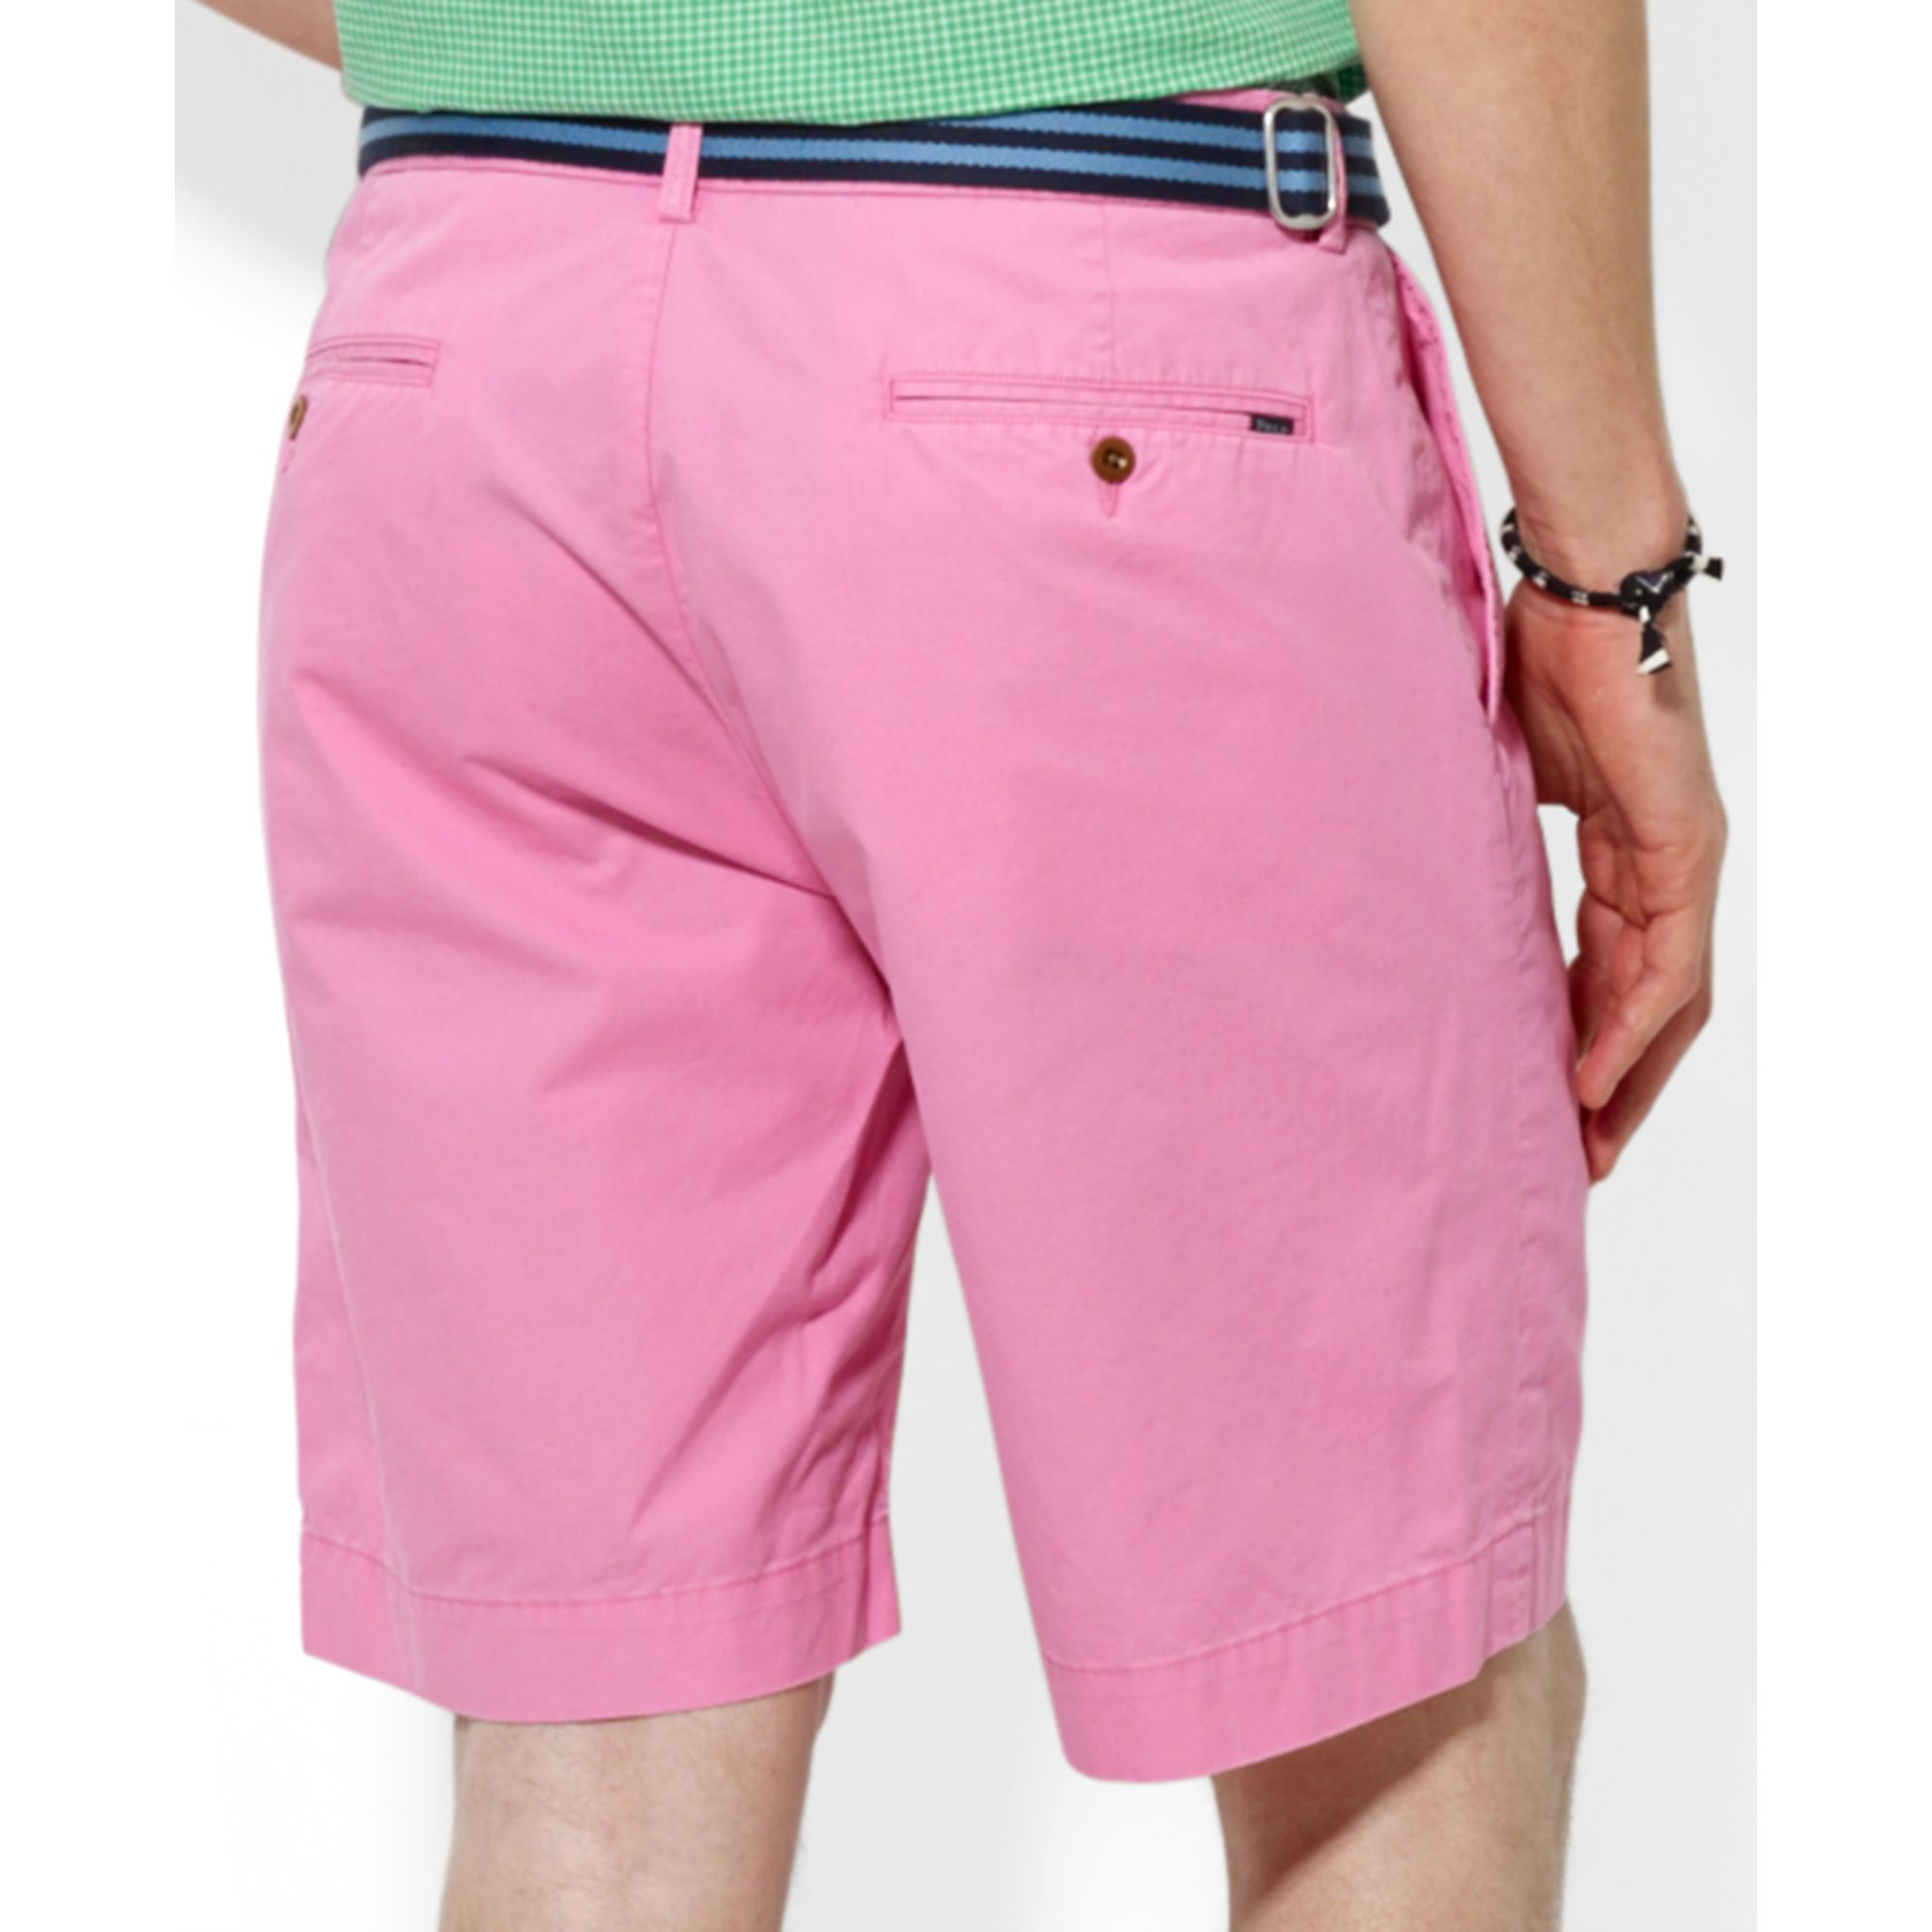 Polo Ralph Lauren 20.3 cm Stretch Straight Fit Chino Men's Shorts - Carmel Pink